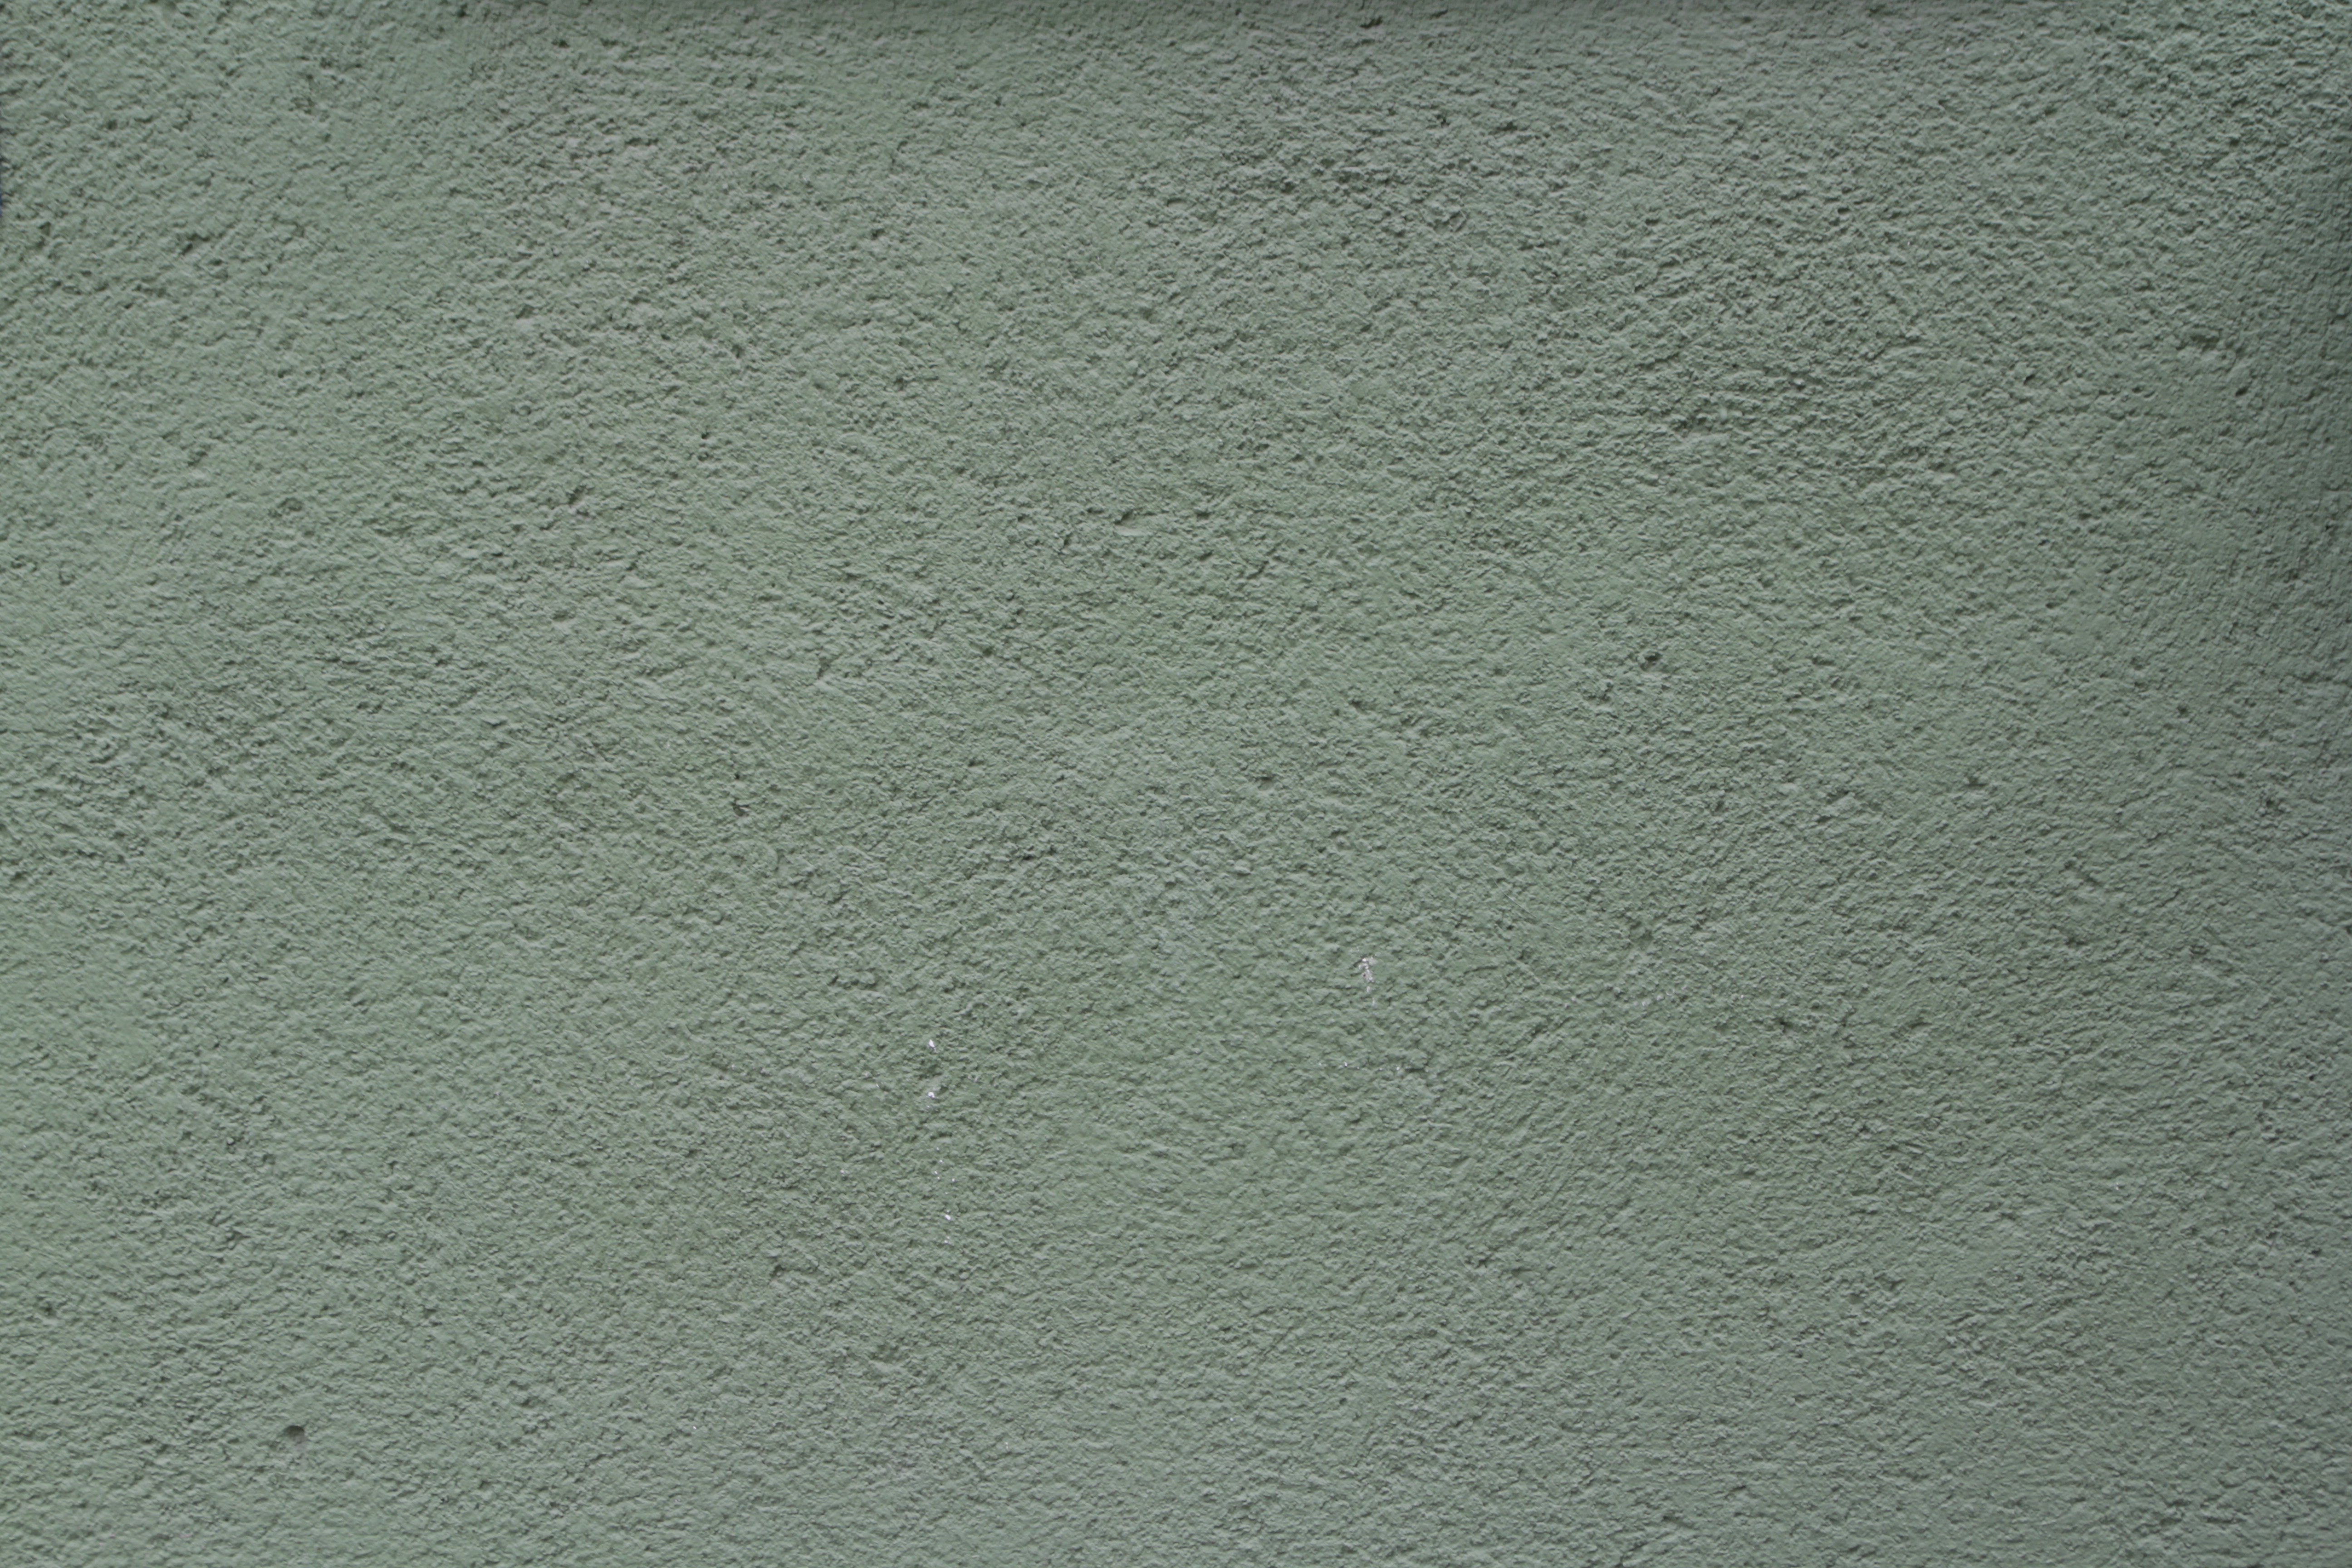 Green concrete wall - Concrete - Texturify - Free textures